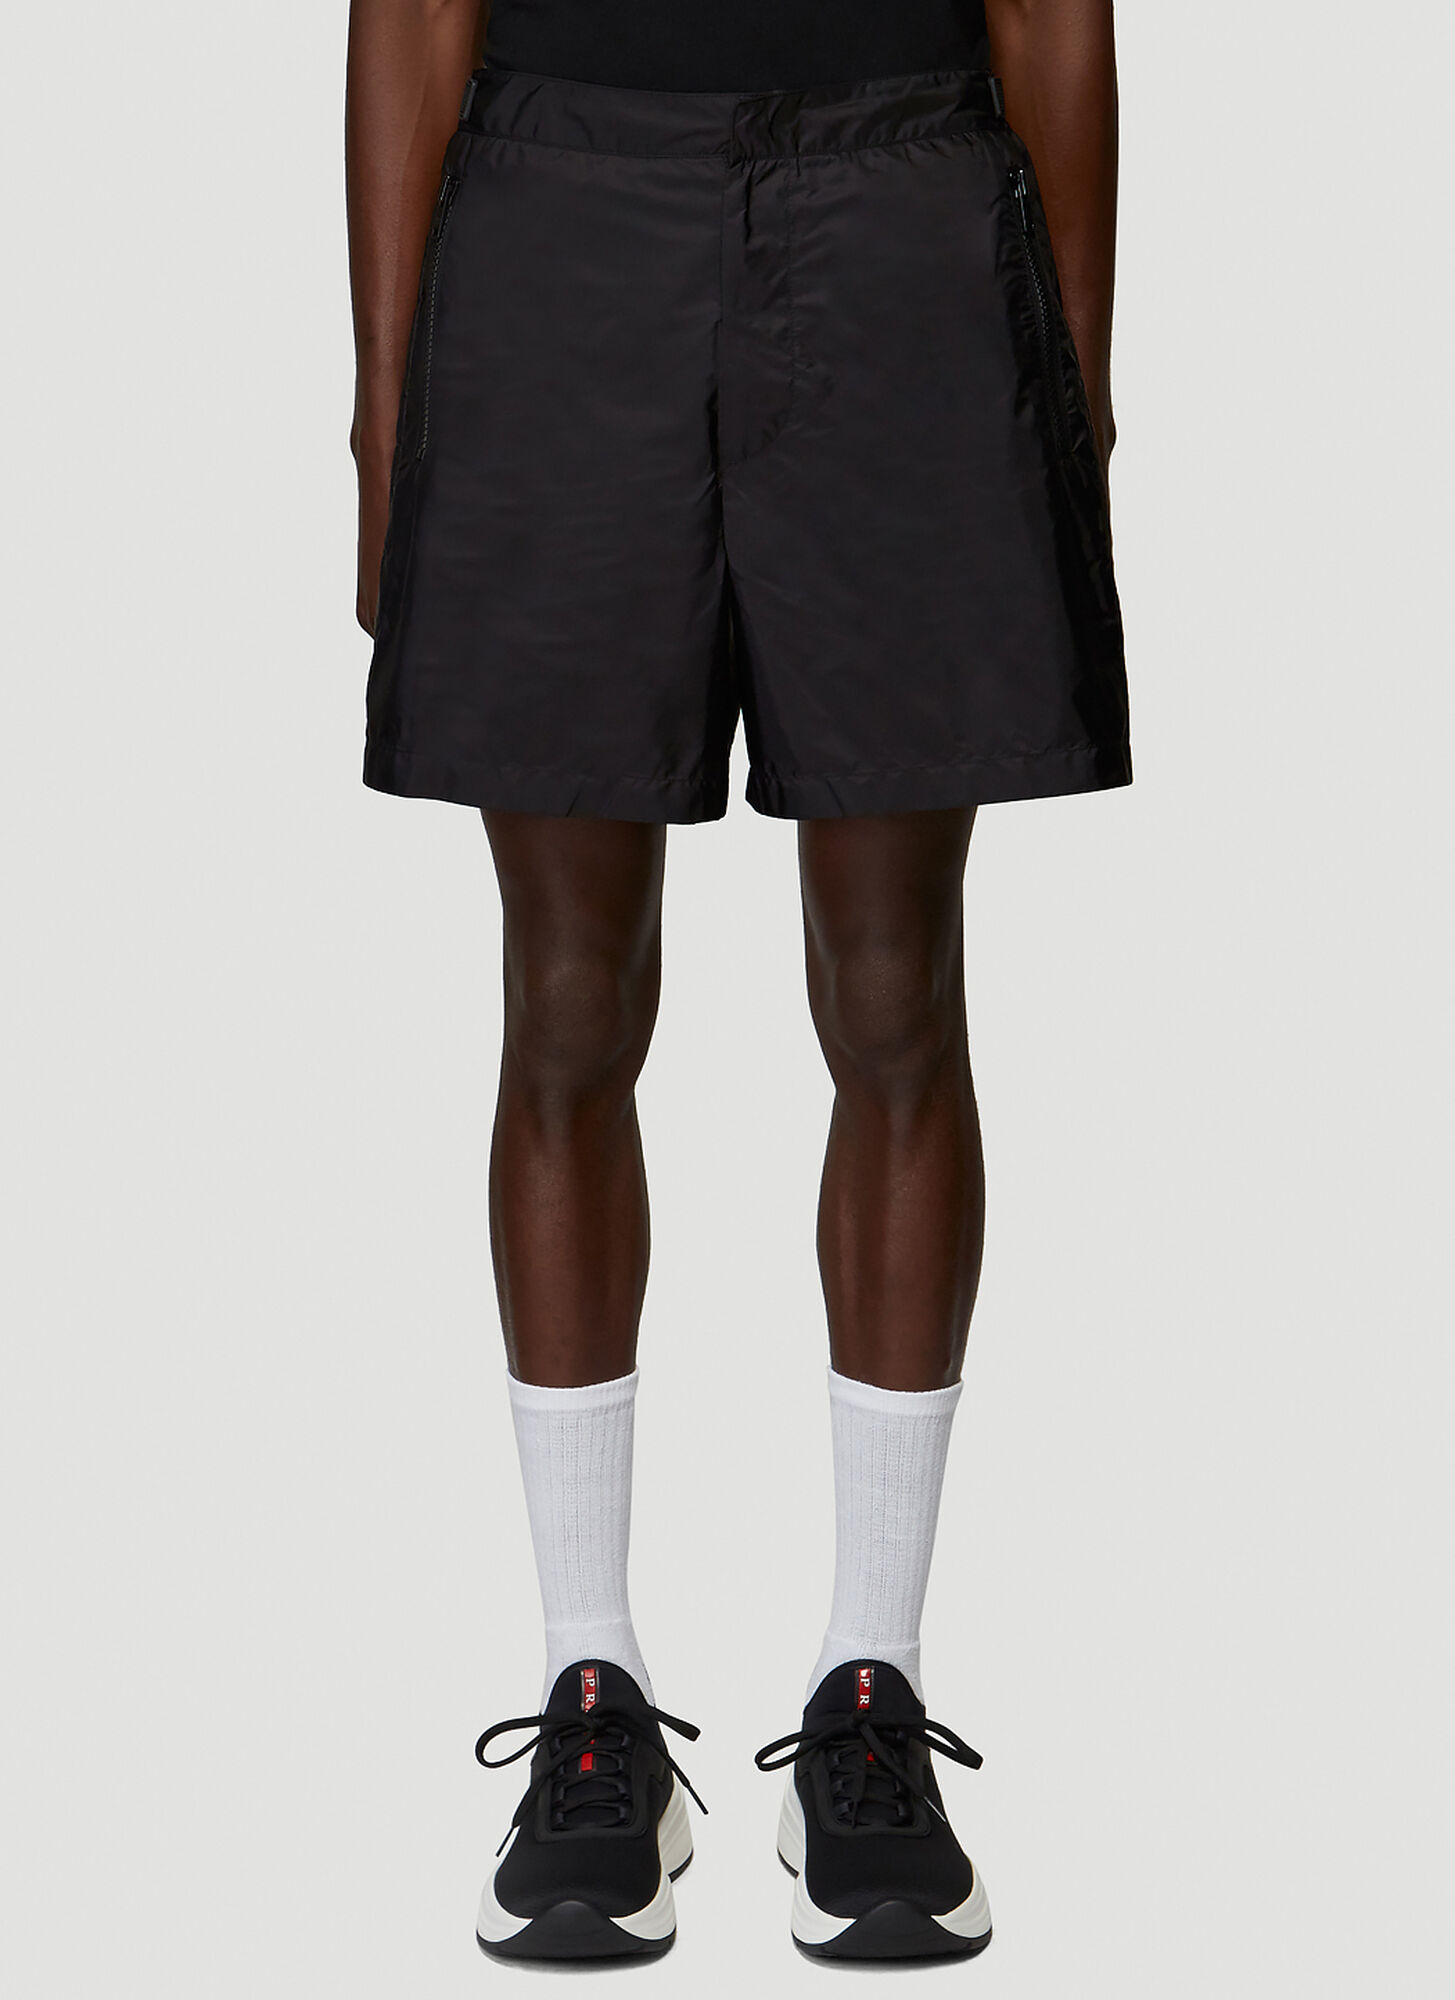 Prada Swim Shorts in Black size IT - 48 | The Fashionisto